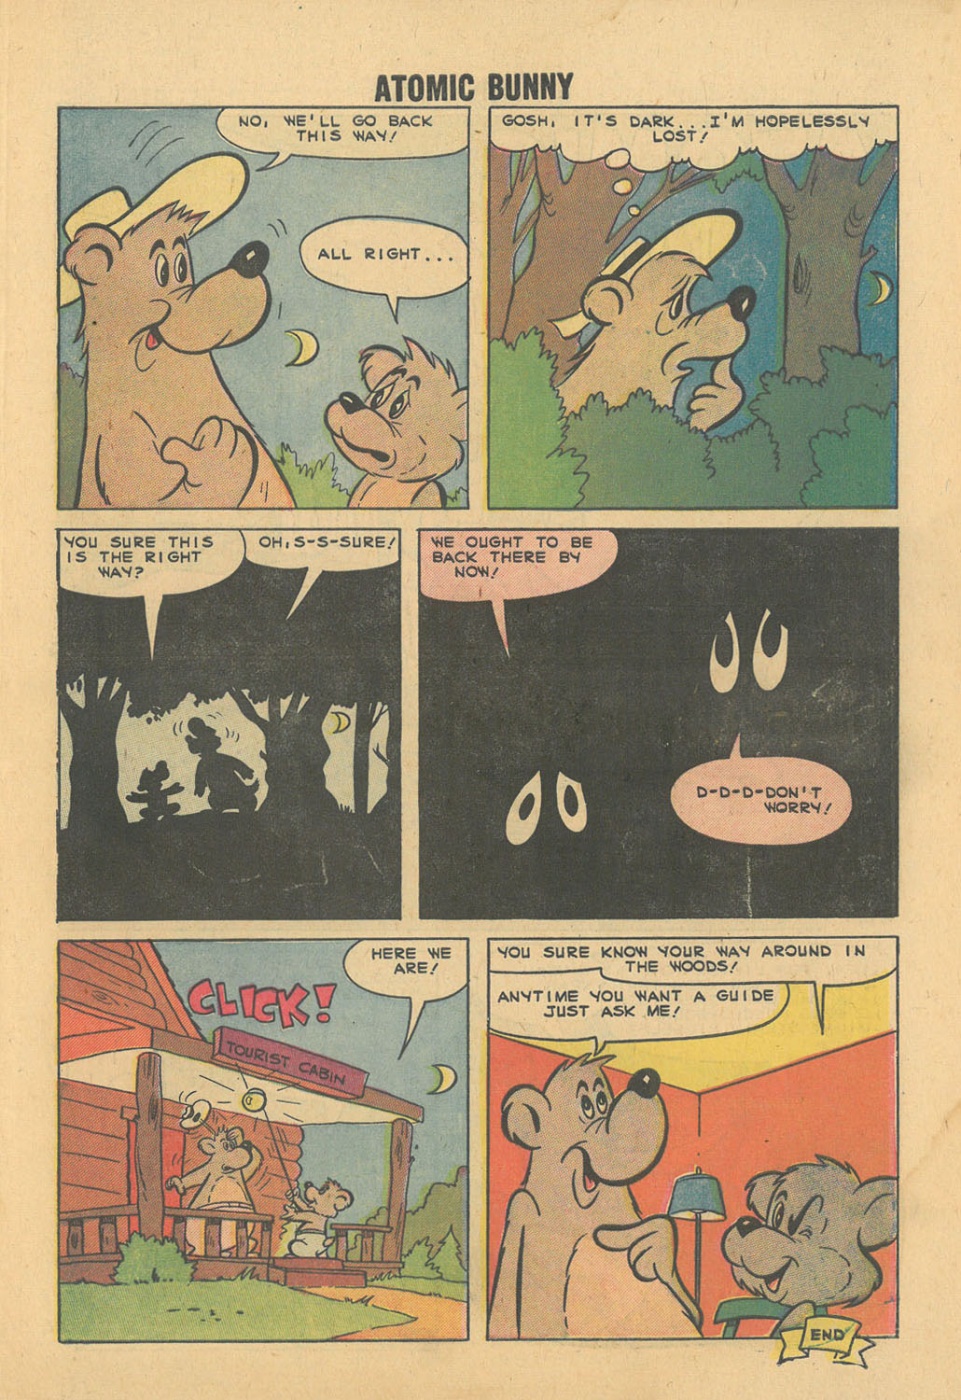 Atomic-Bunny-Comic-Strips (c) (26)